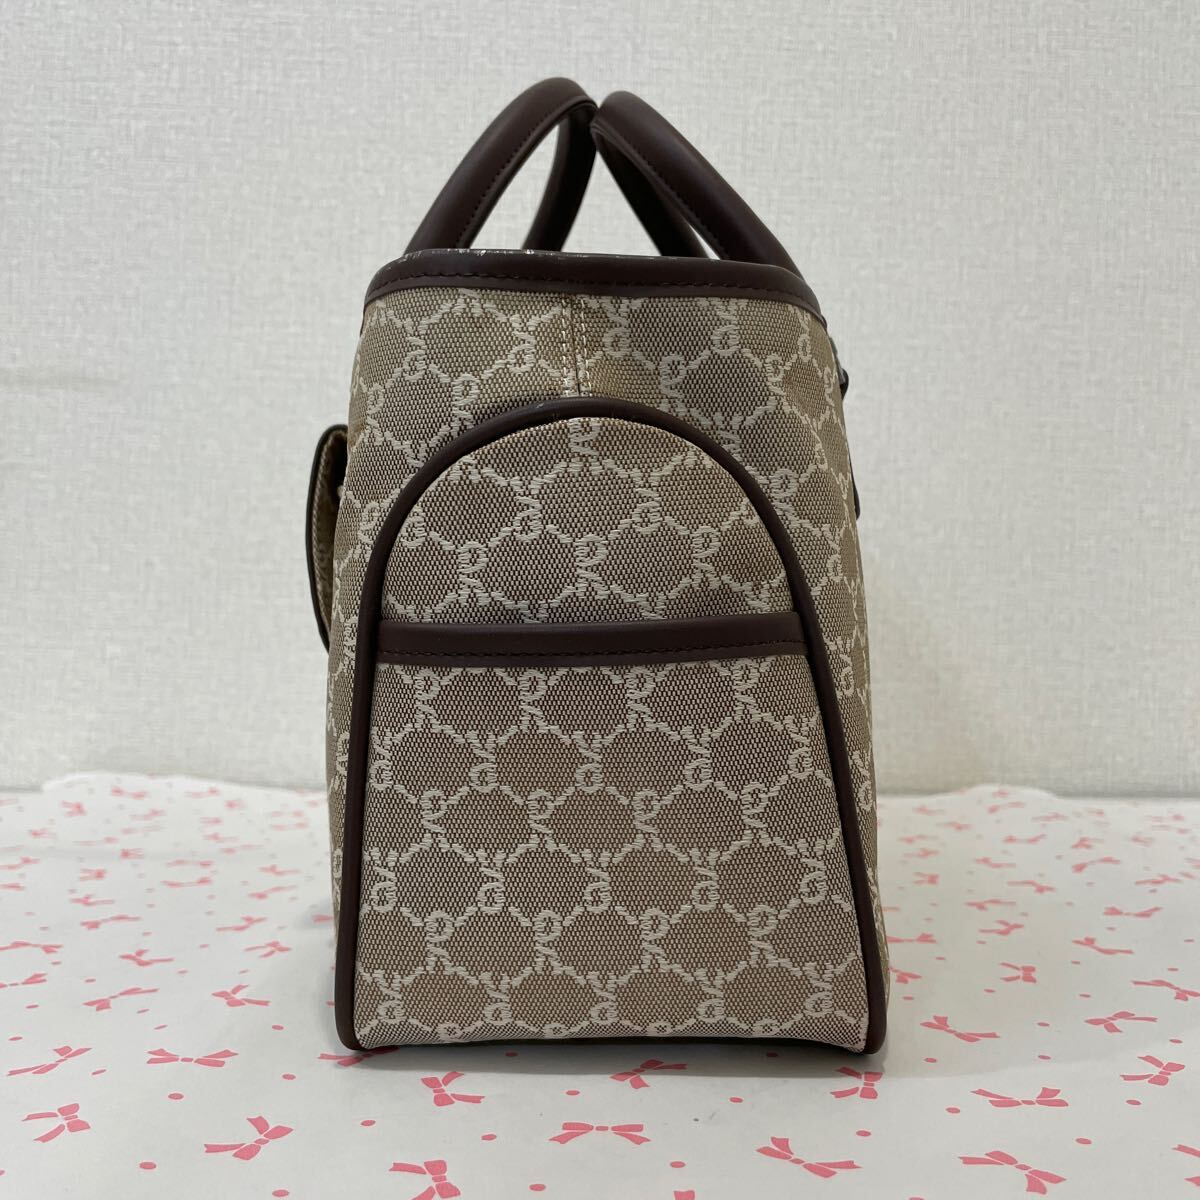  Roberta di Camerino beautiful goods handbag tote bag stylish 